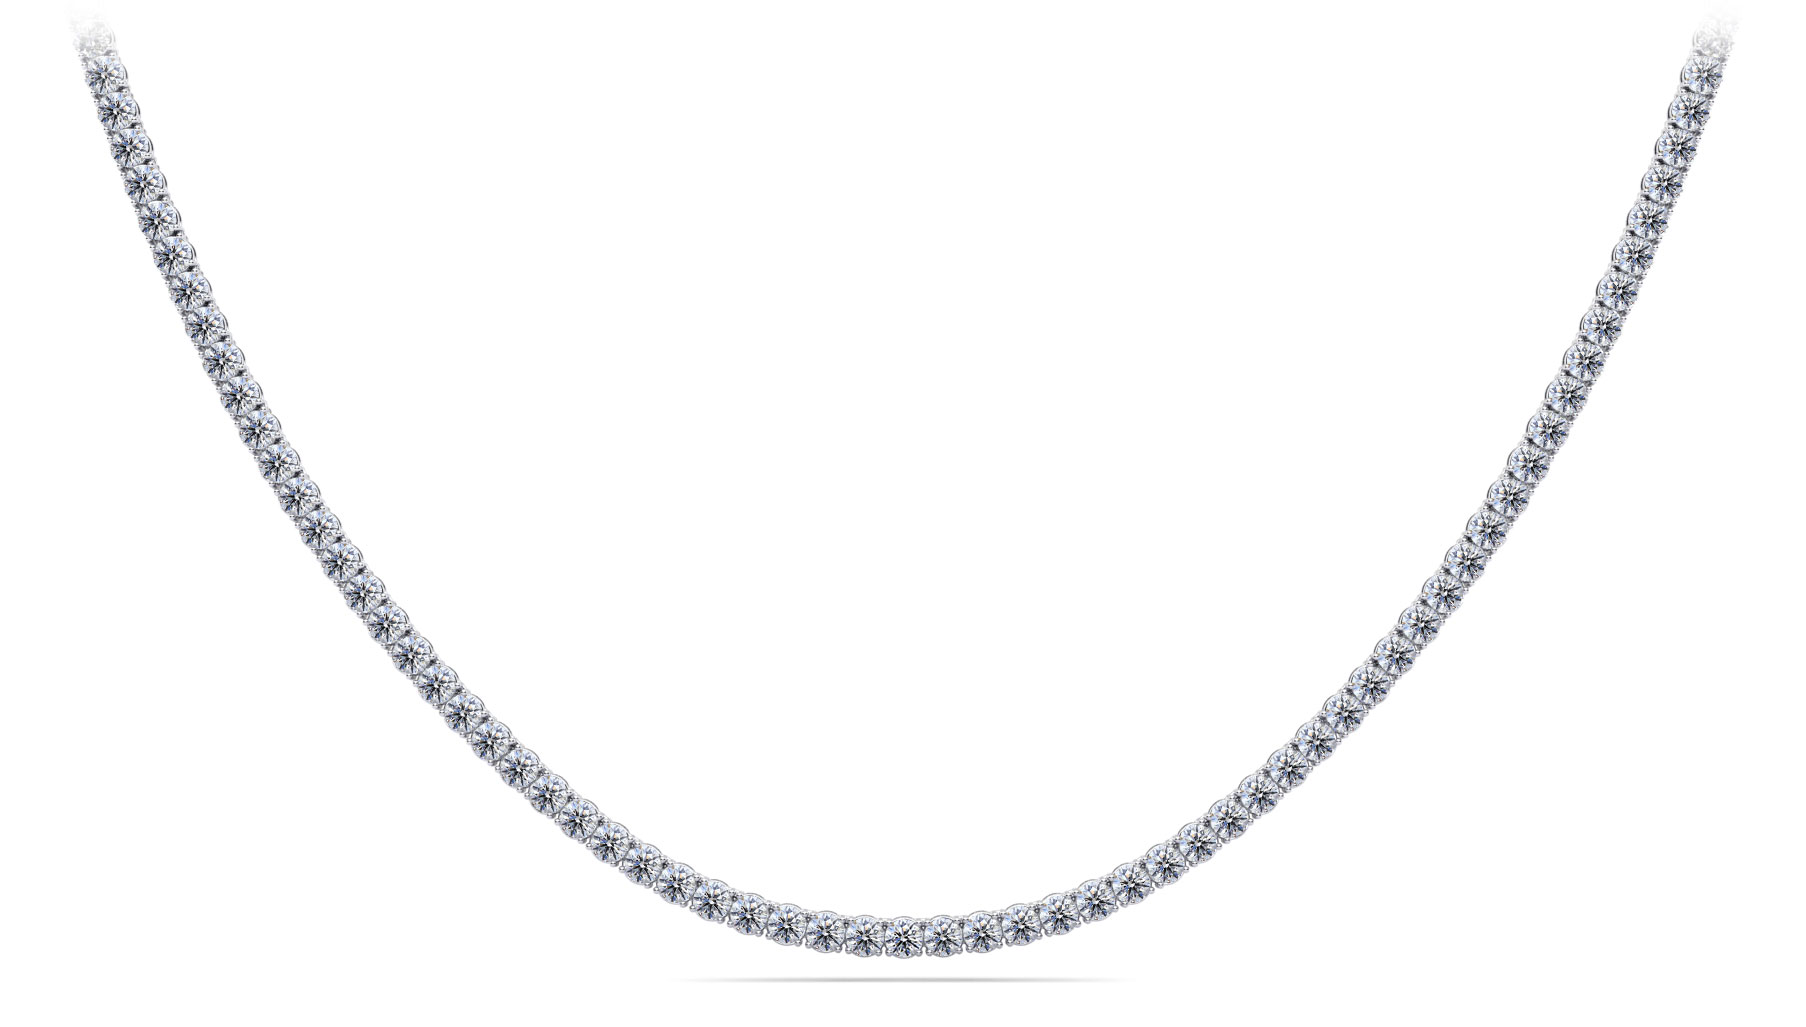 3.27 carat diamond riviera necklace | Heritage Gem Studio | Buy at TrueFacet